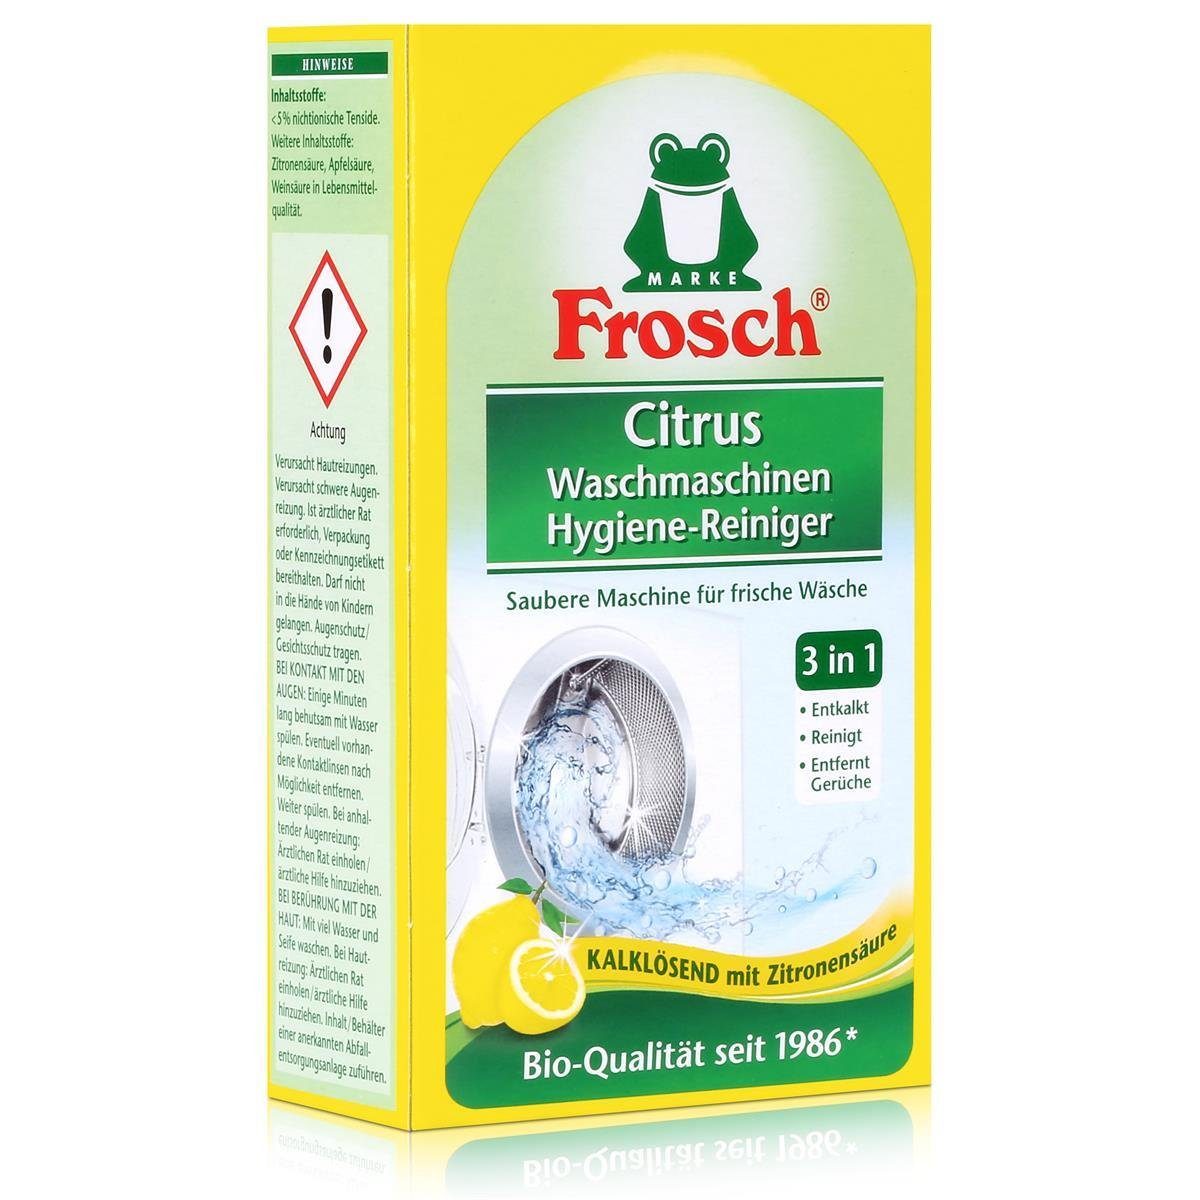 FROSCH Frosch Citrus Waschmaschinen Hygiene-Reiniger P Kalklösend 250g - Spezialwaschmittel (5er